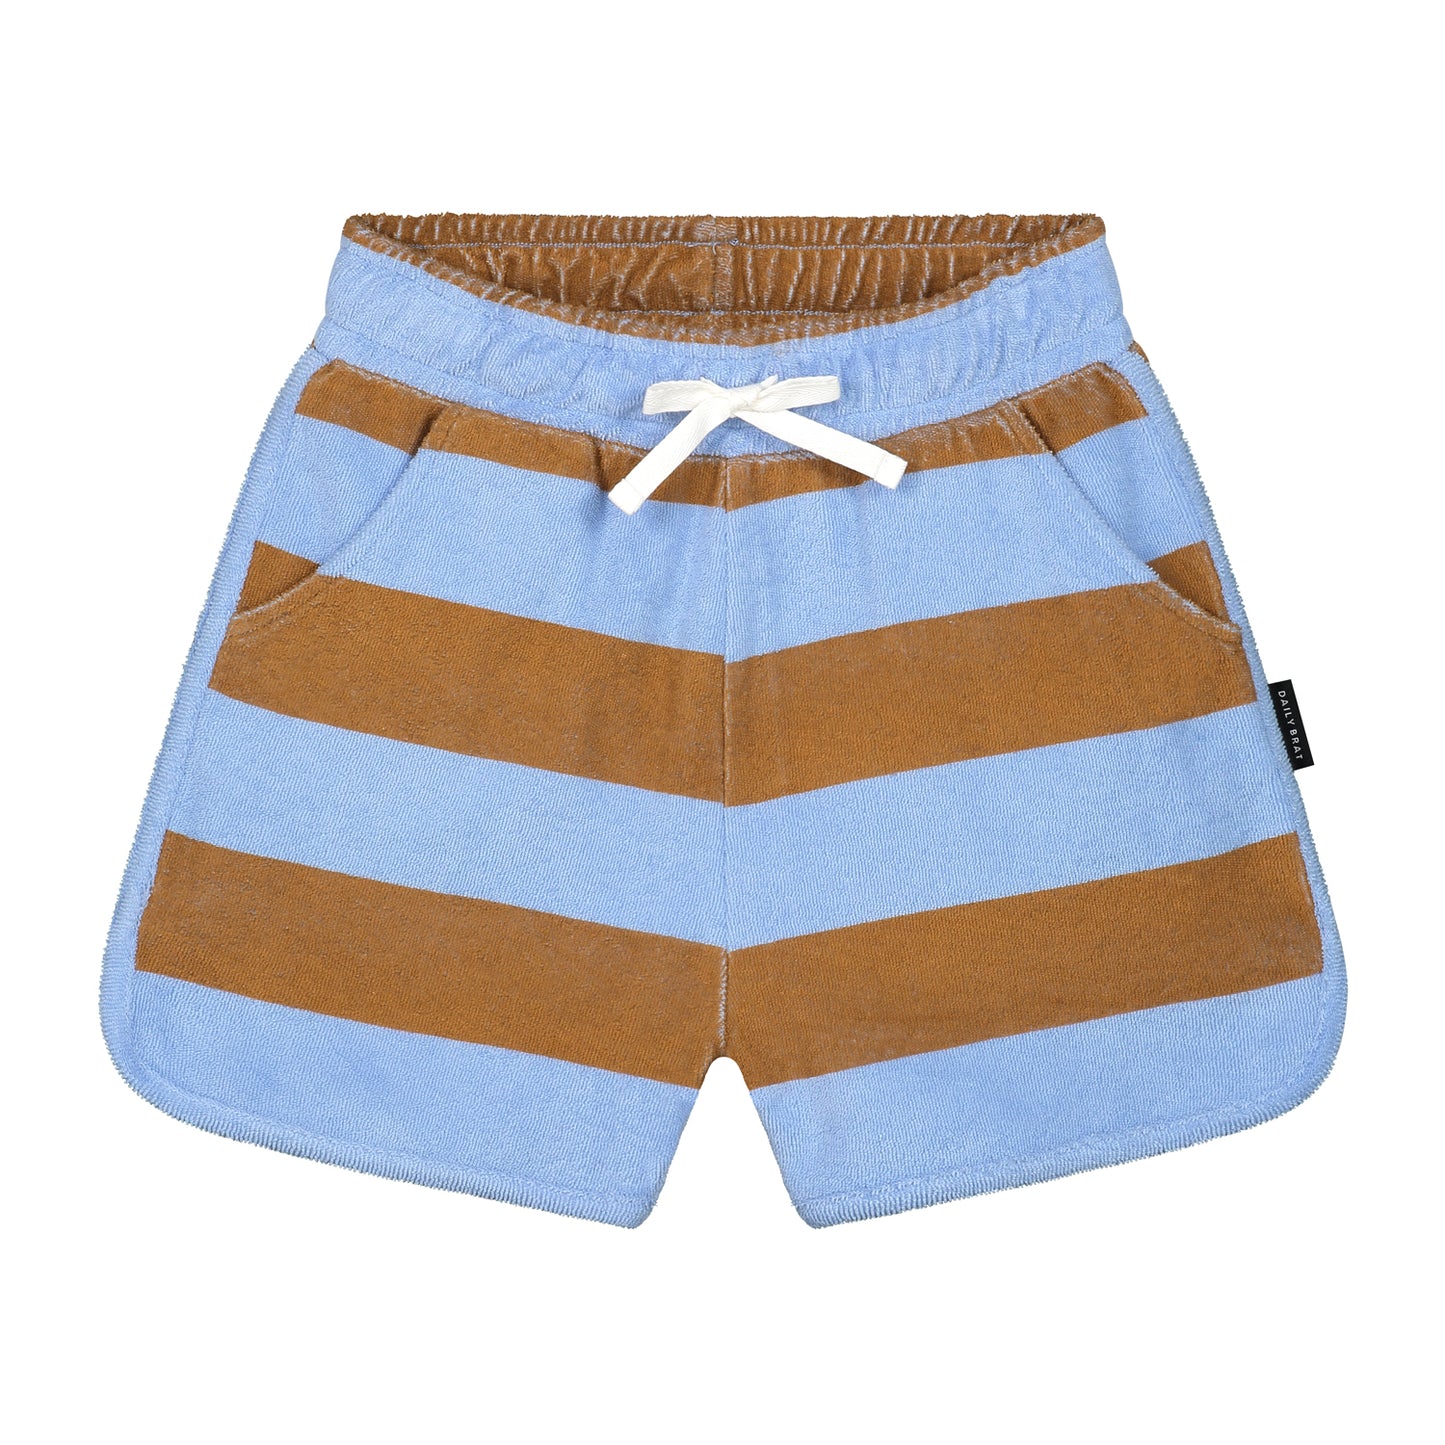 Daily Brat - Striped towel shorts serenity blue